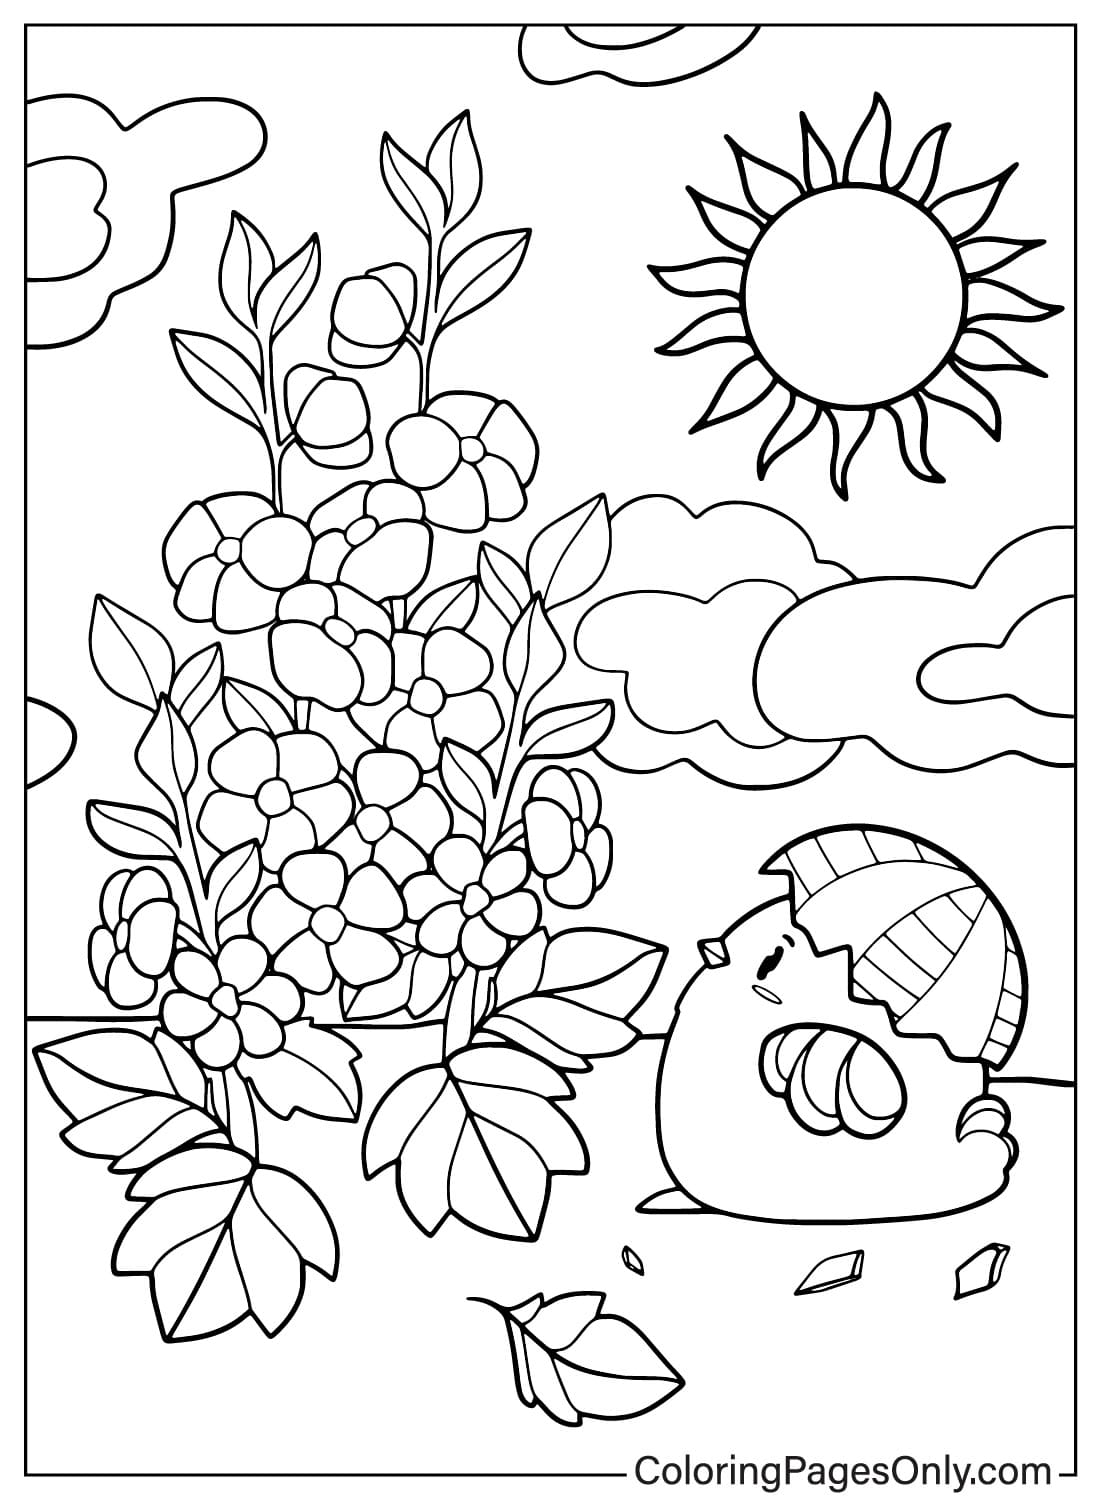 Desenho para colorir de primavera JPG